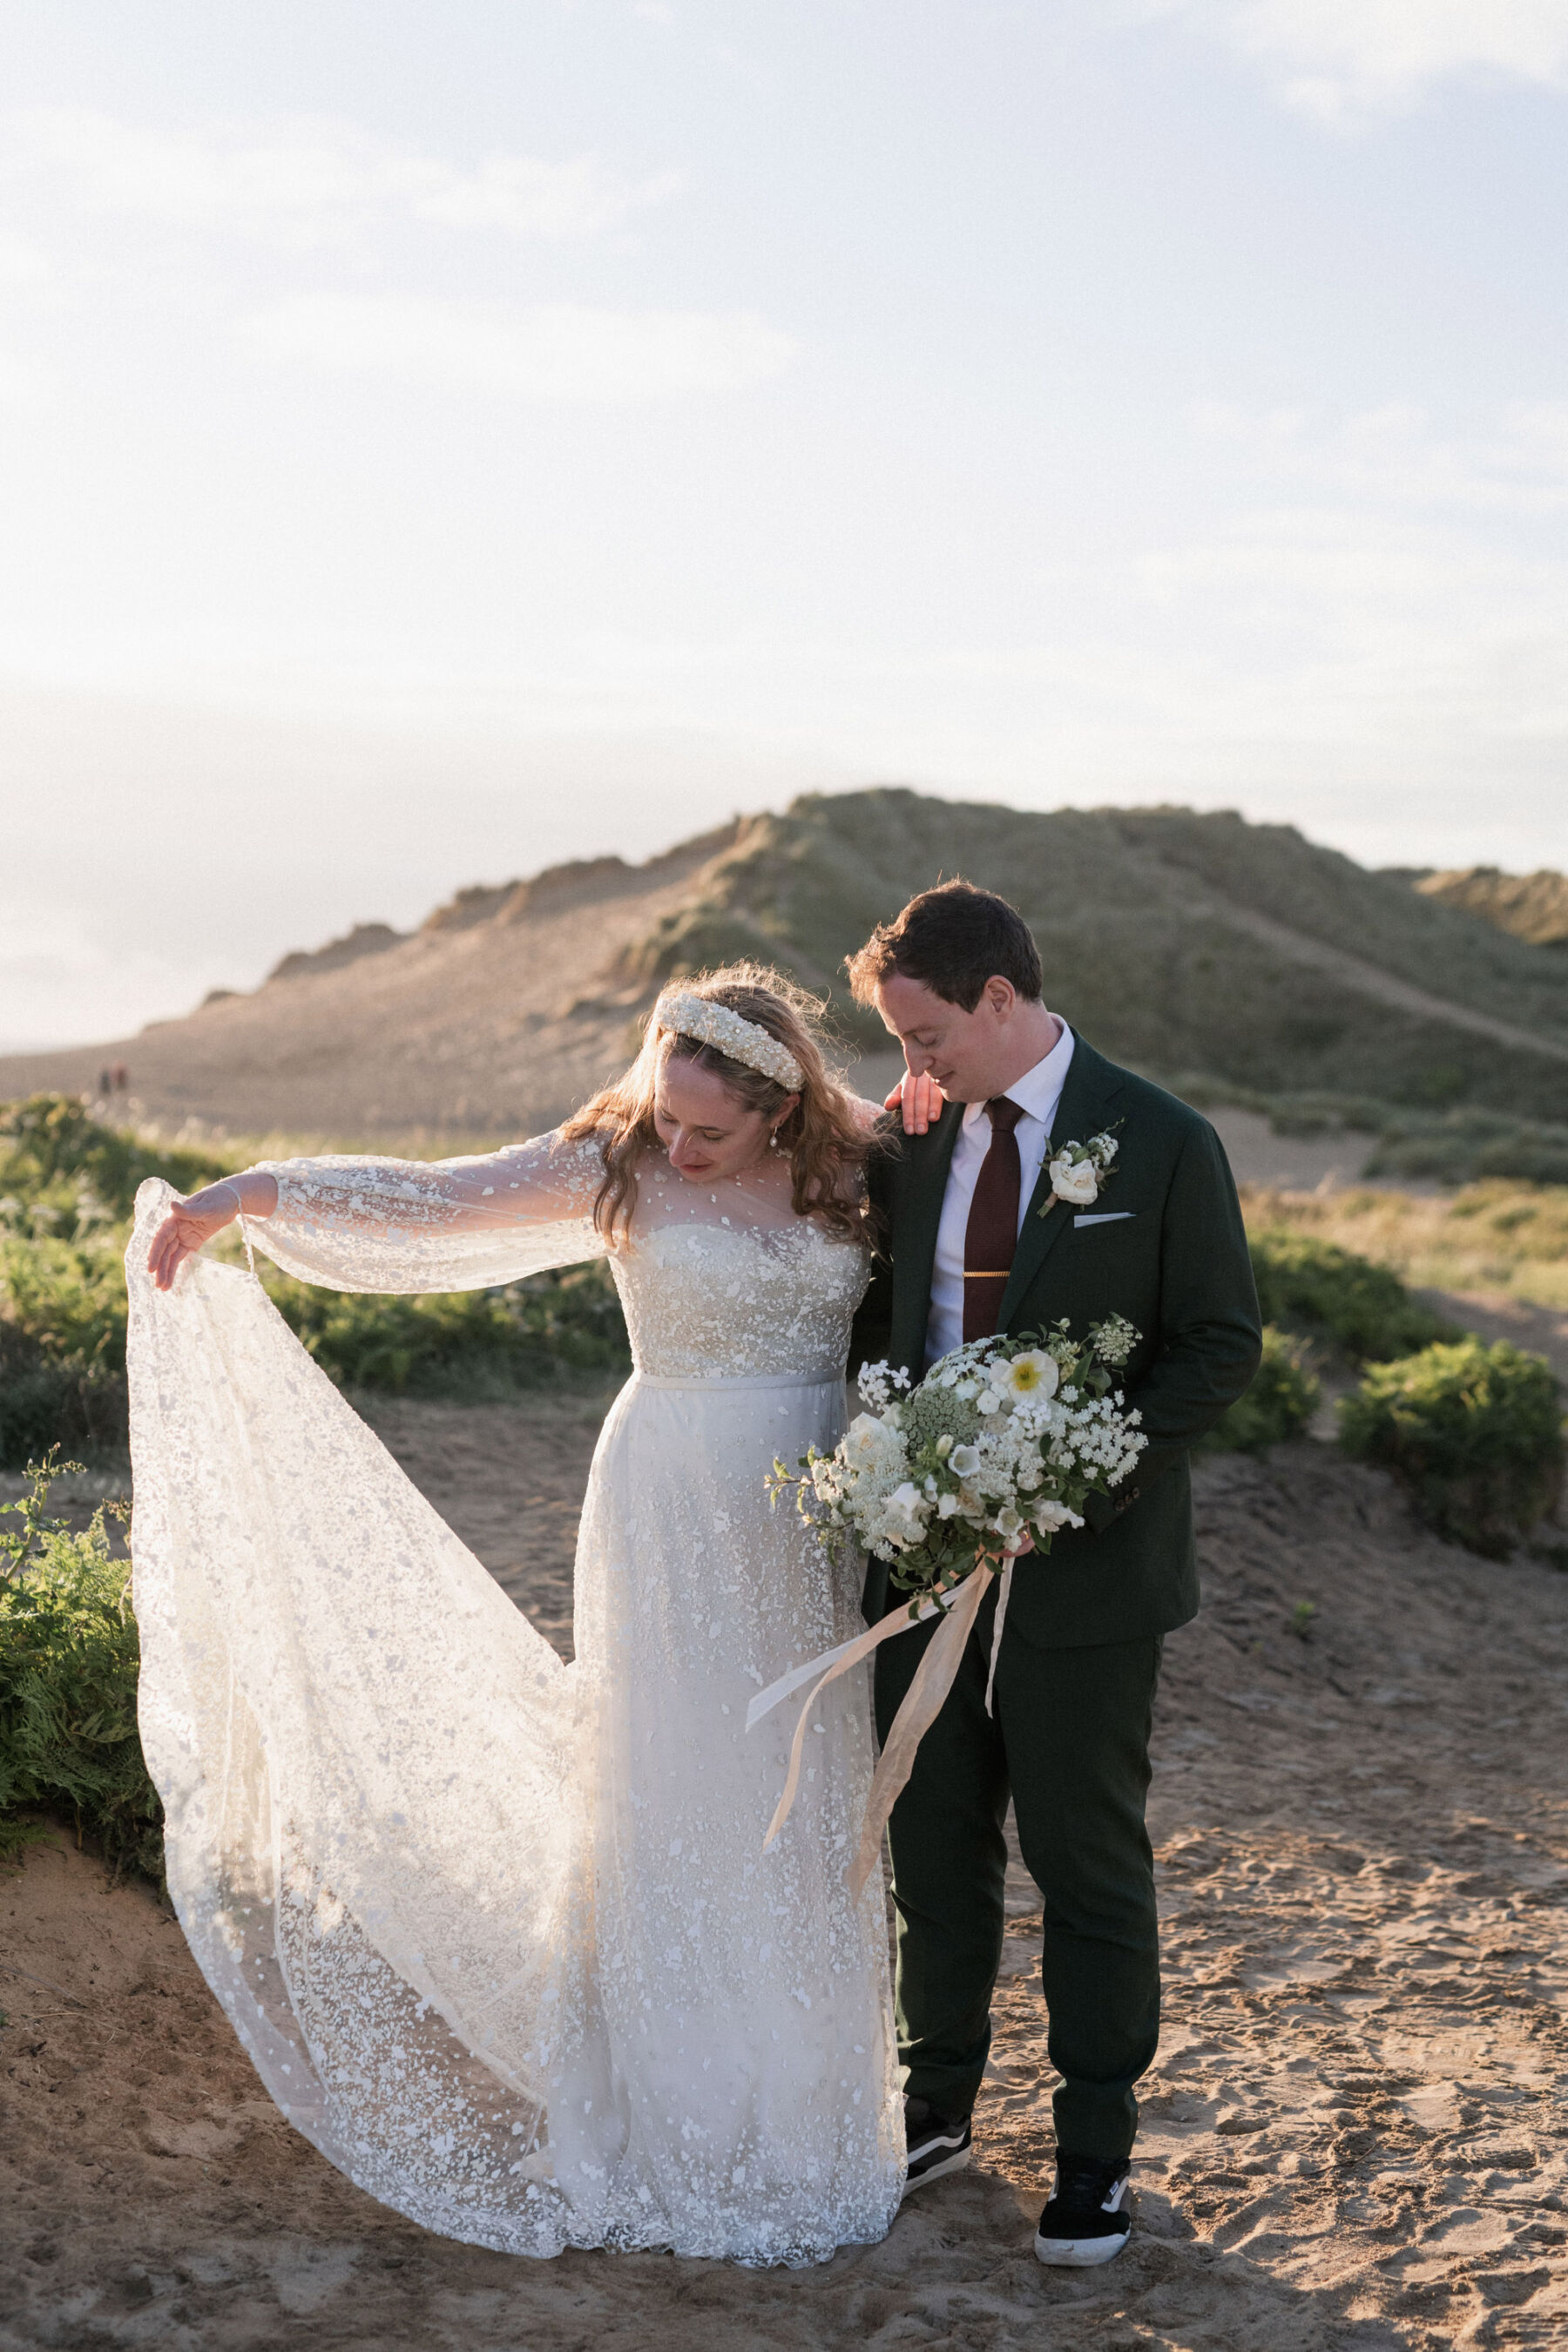 Jesus Peiro wedding dress, Treseren Cornwall Wedding. Lyra & Moth Photography.